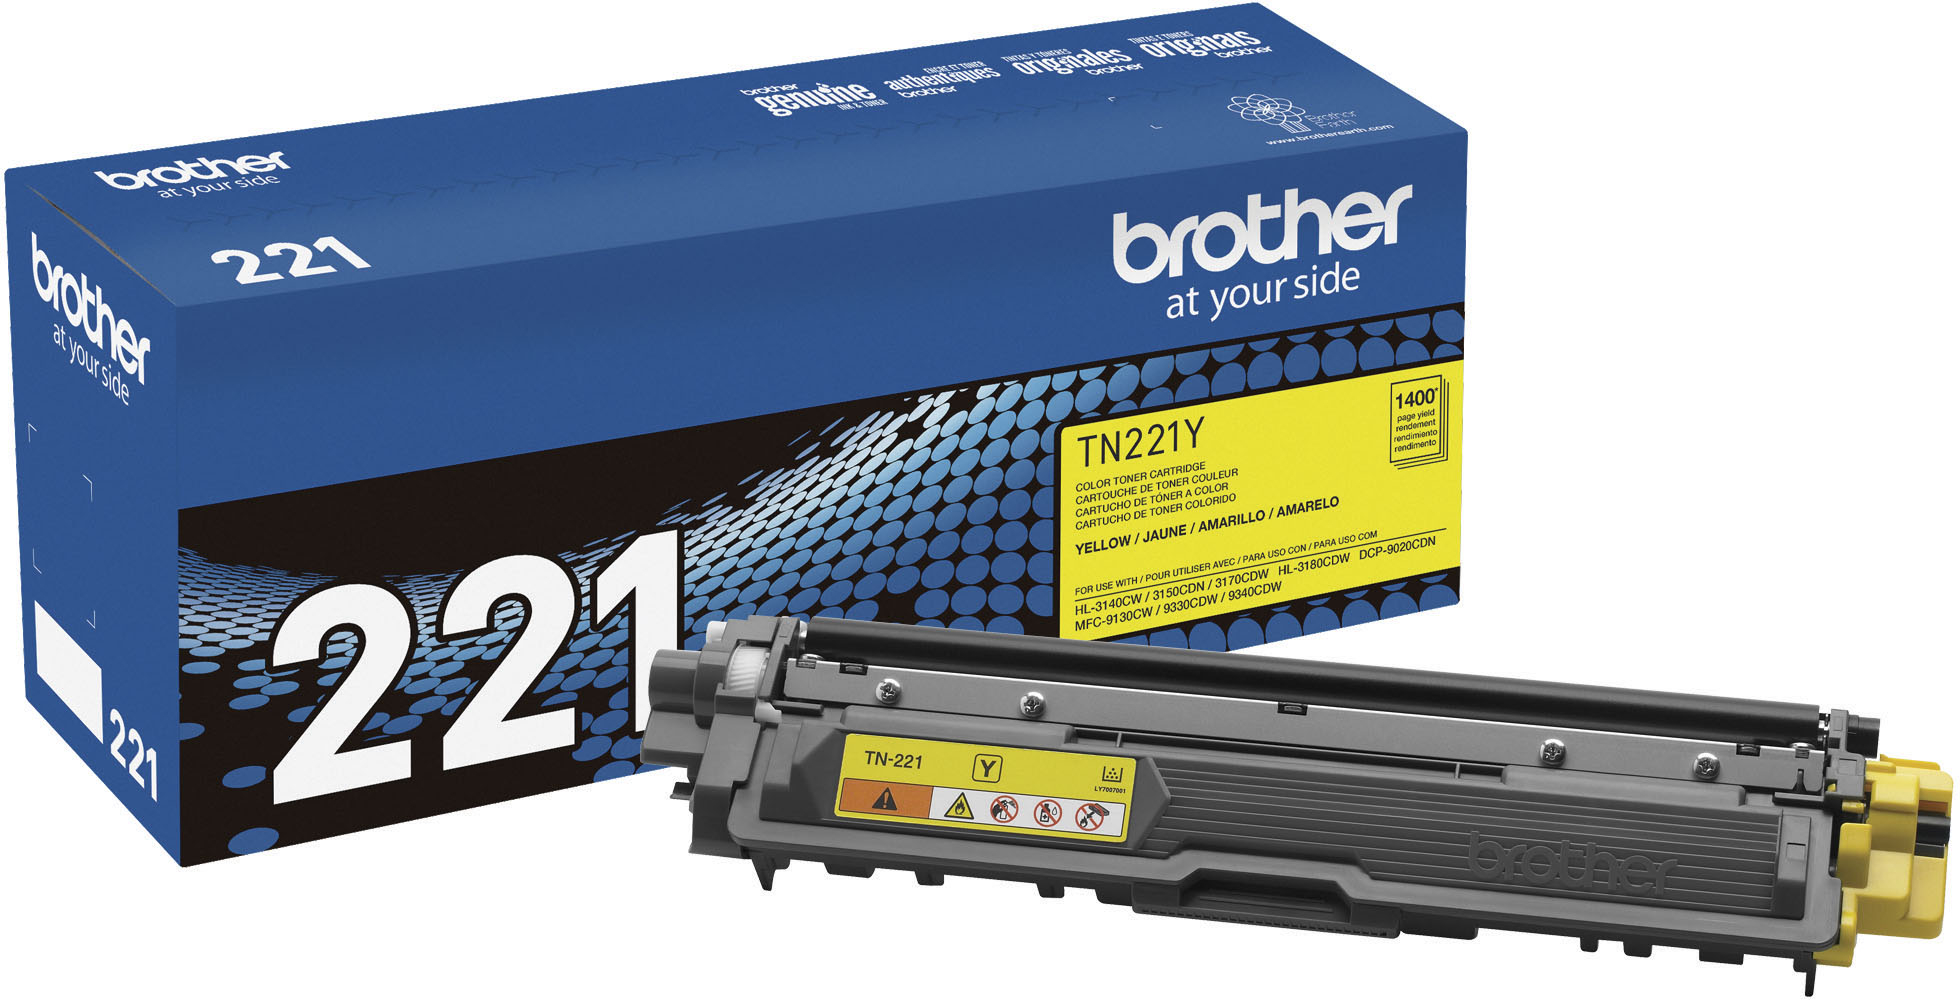 Brother MFC-9330 Toner Cartridges